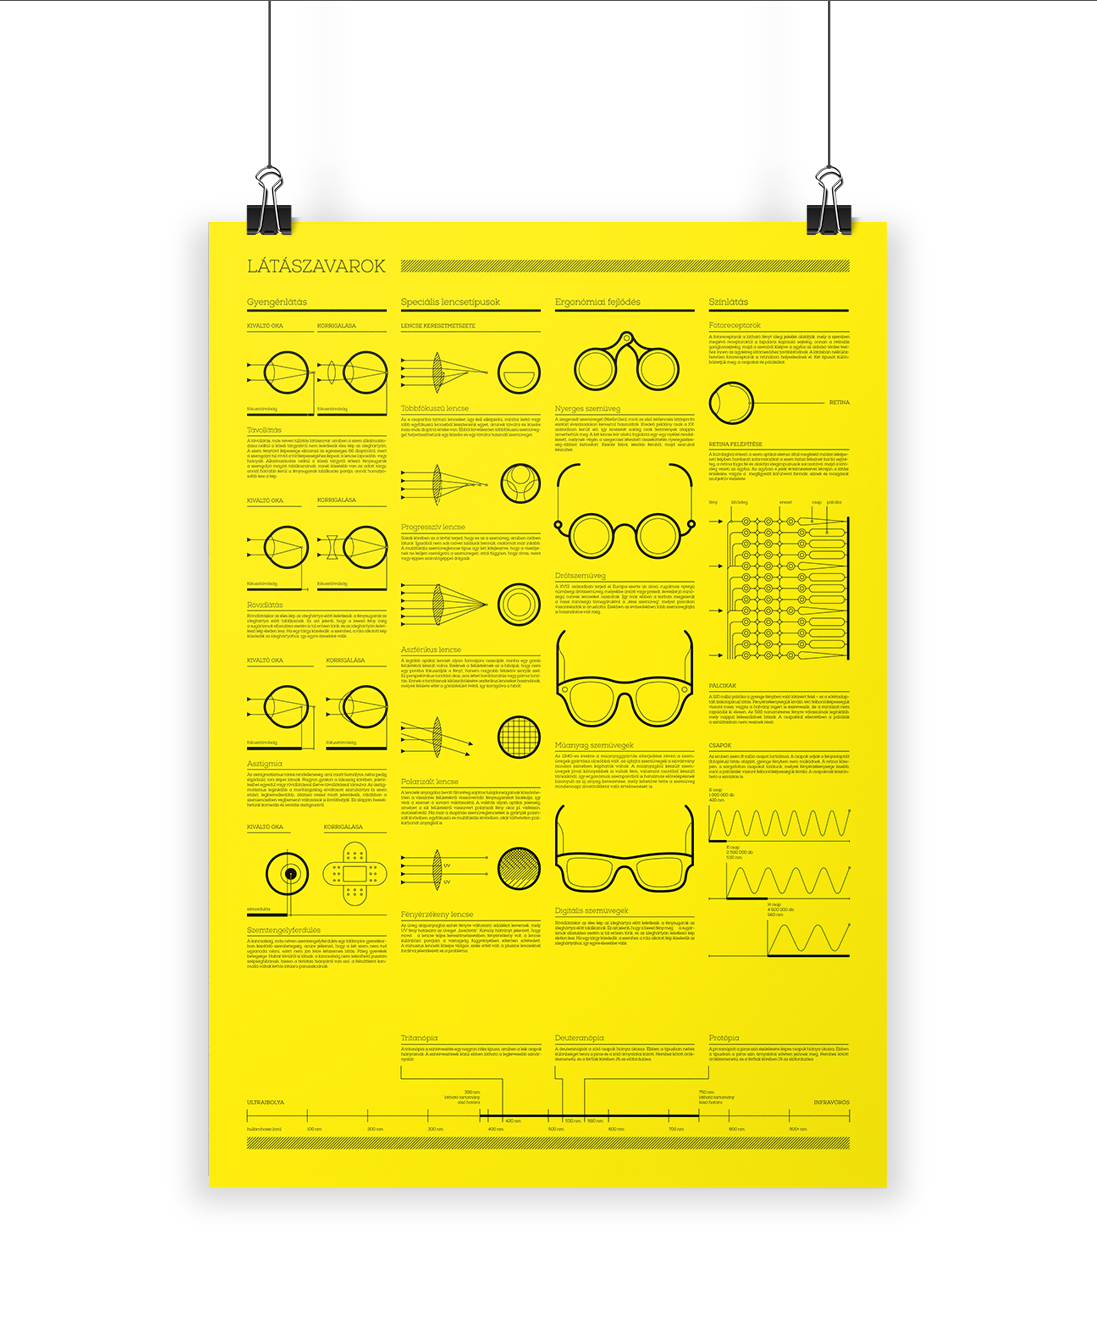 infographic disorder eye glasses Latas látászavar vision poster seeing eye-disorder zavar